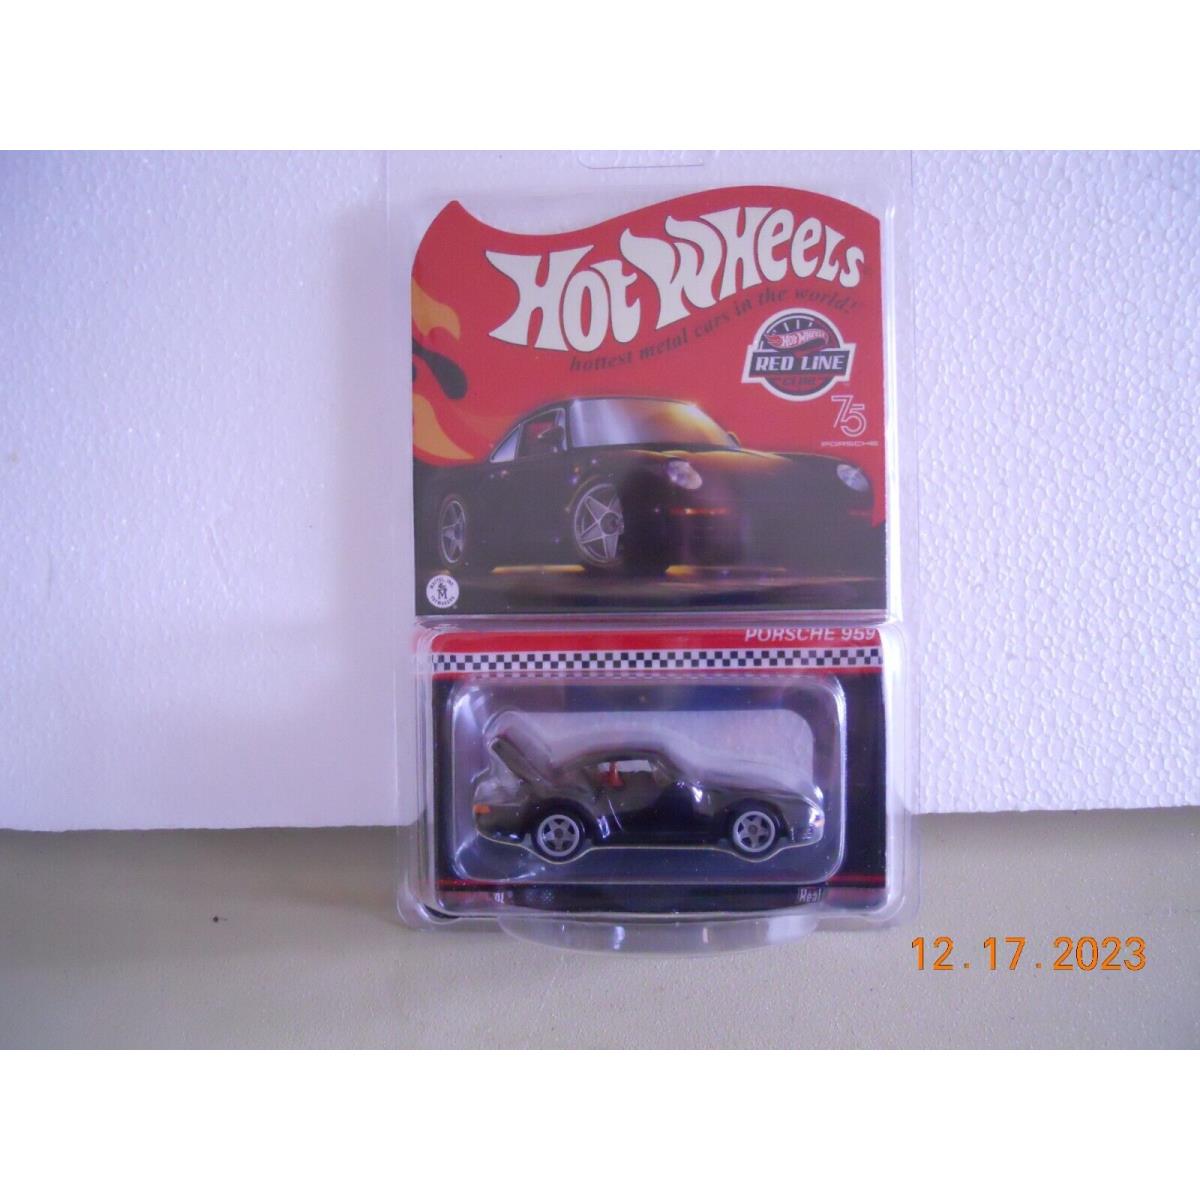 Rlc Hot Wheels Red Line Club Exclusive Black Porsche 959 1:64 Die Cast Car